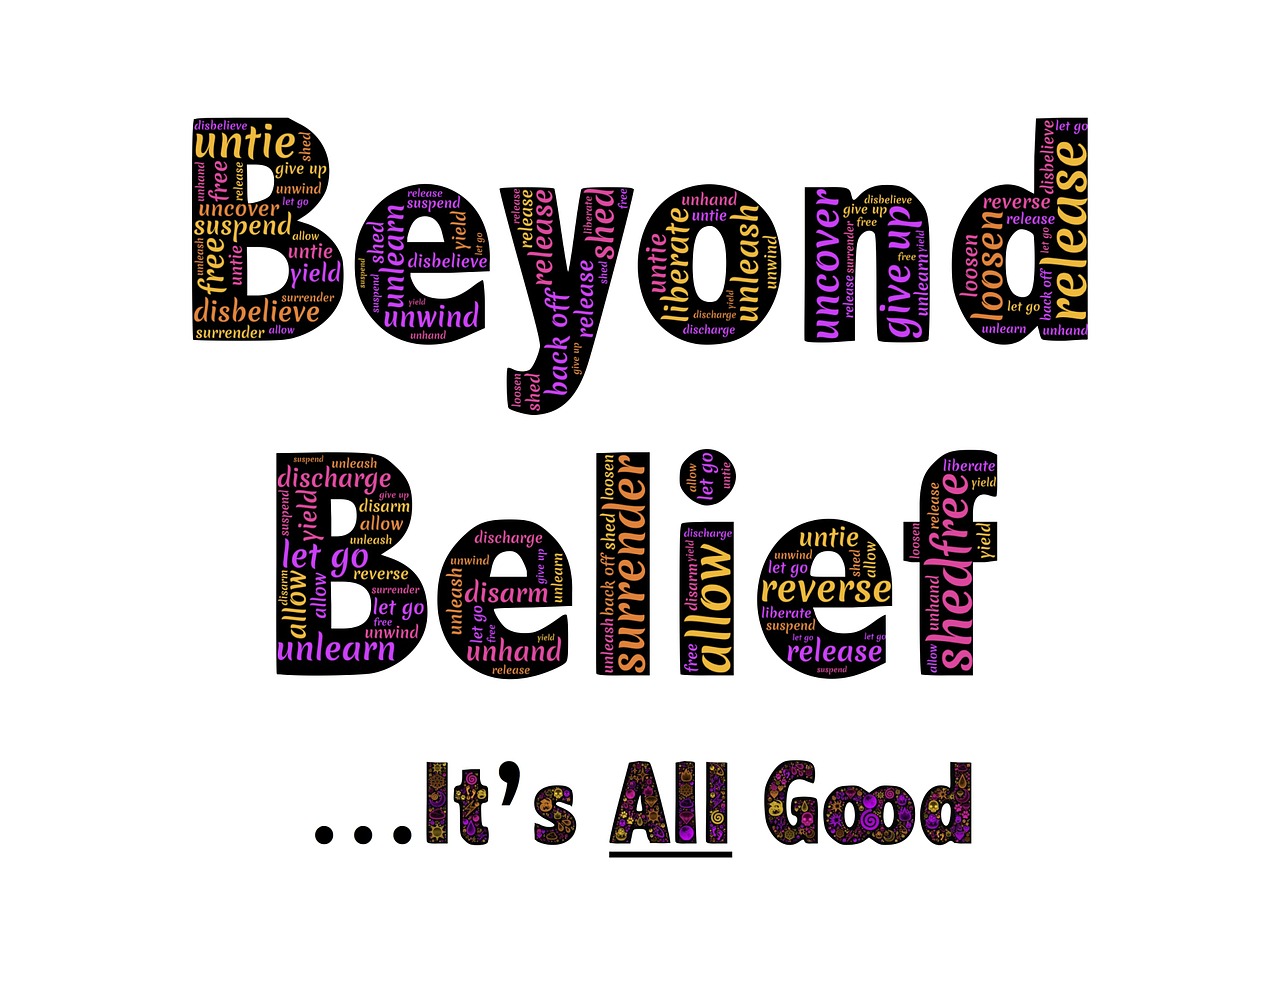 beyond belief yield free photo